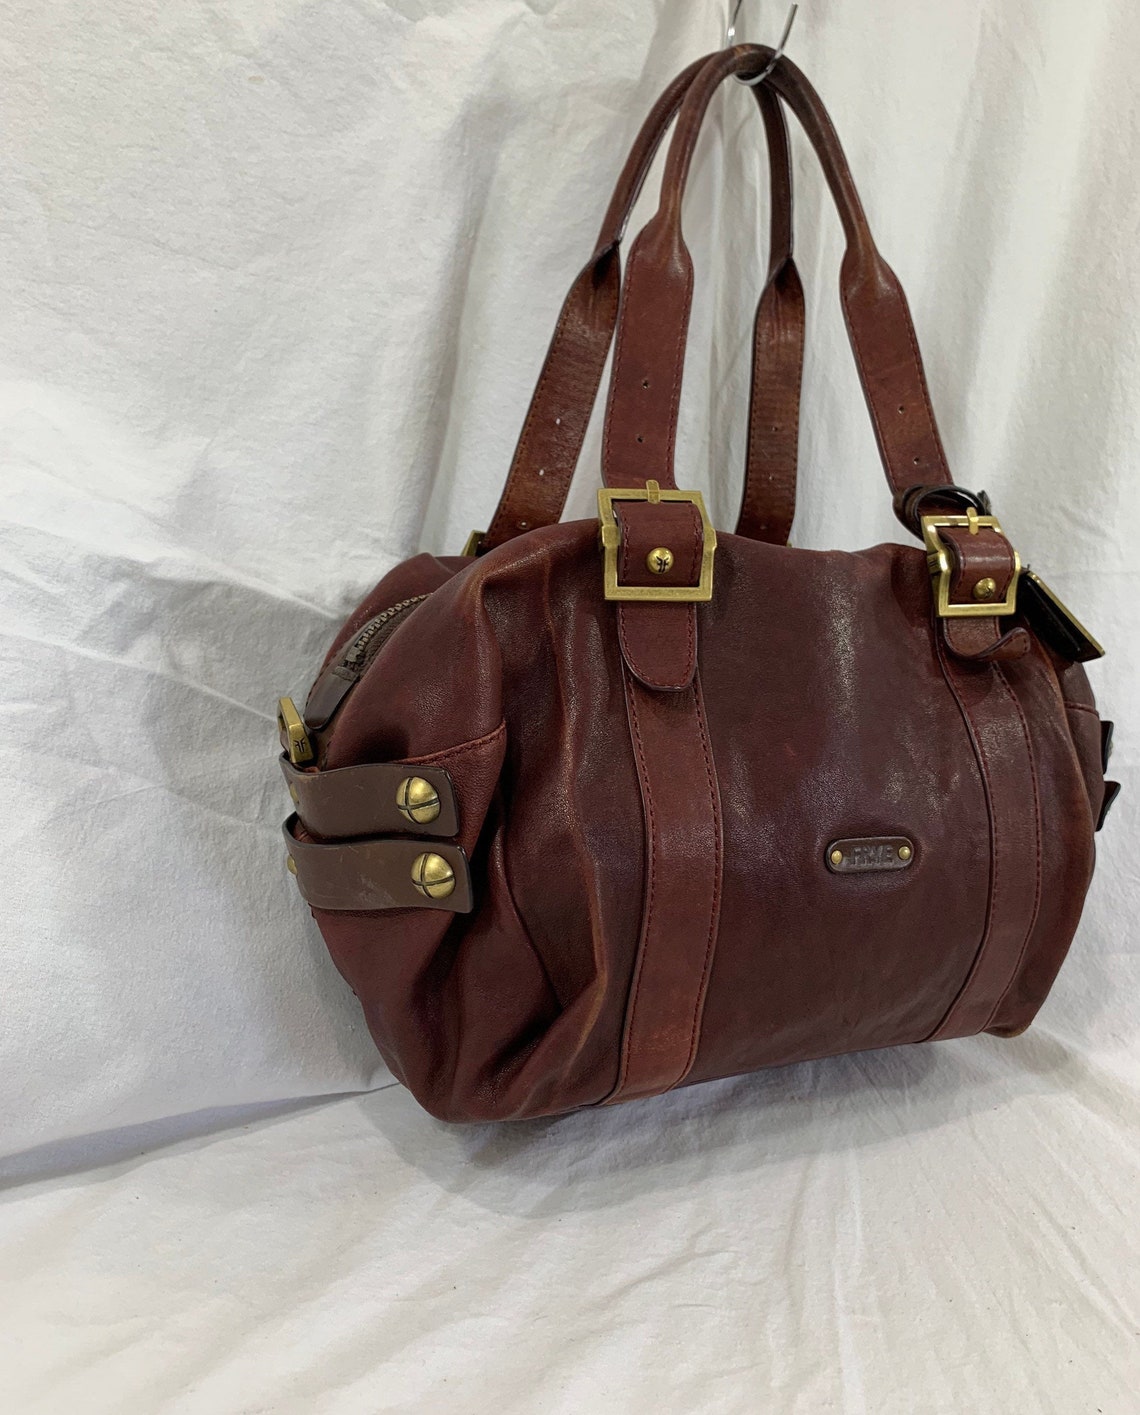 Vintage FRYE burgundy brown leather satchel bag purse | Etsy